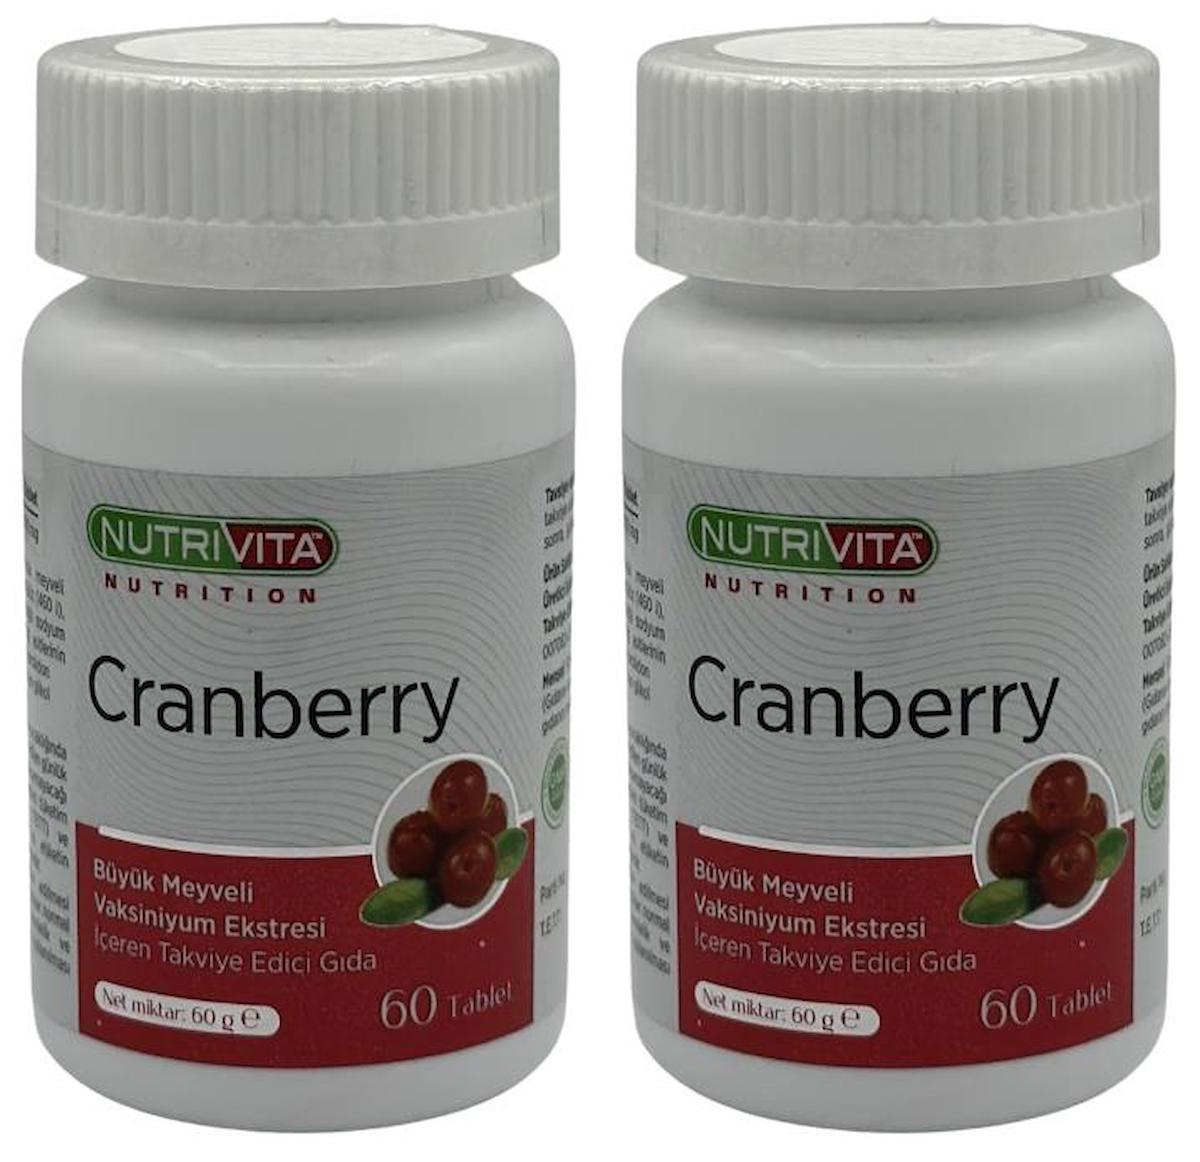 Nutrivita Nutrition Cranberry Aromasız Unisex Vitamin 2x60 Tablet